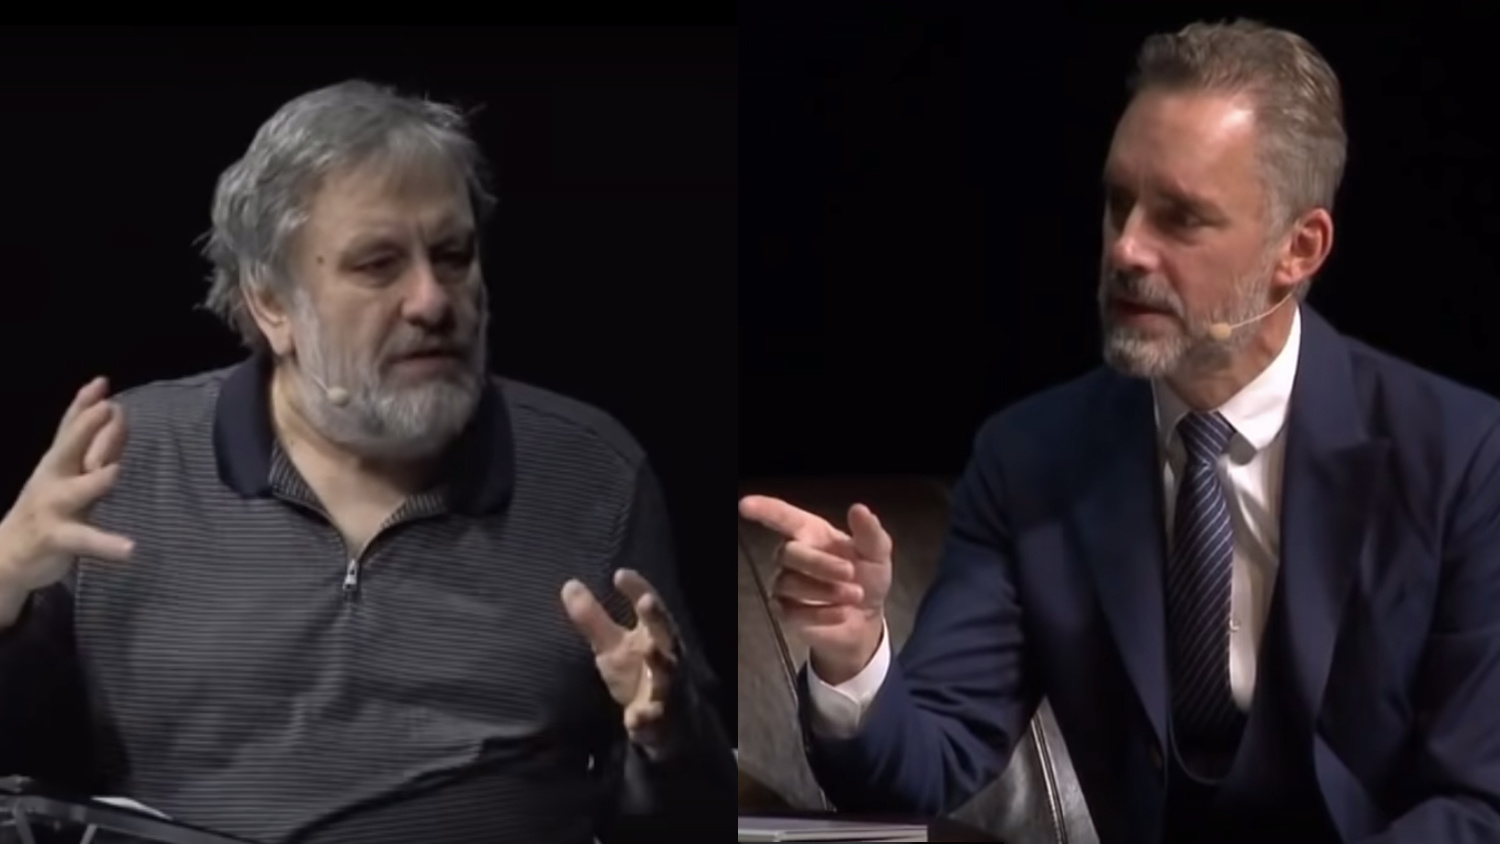 Highlights "debate of the century": Jordan Peterson and Slavoj Zizek - Big Think